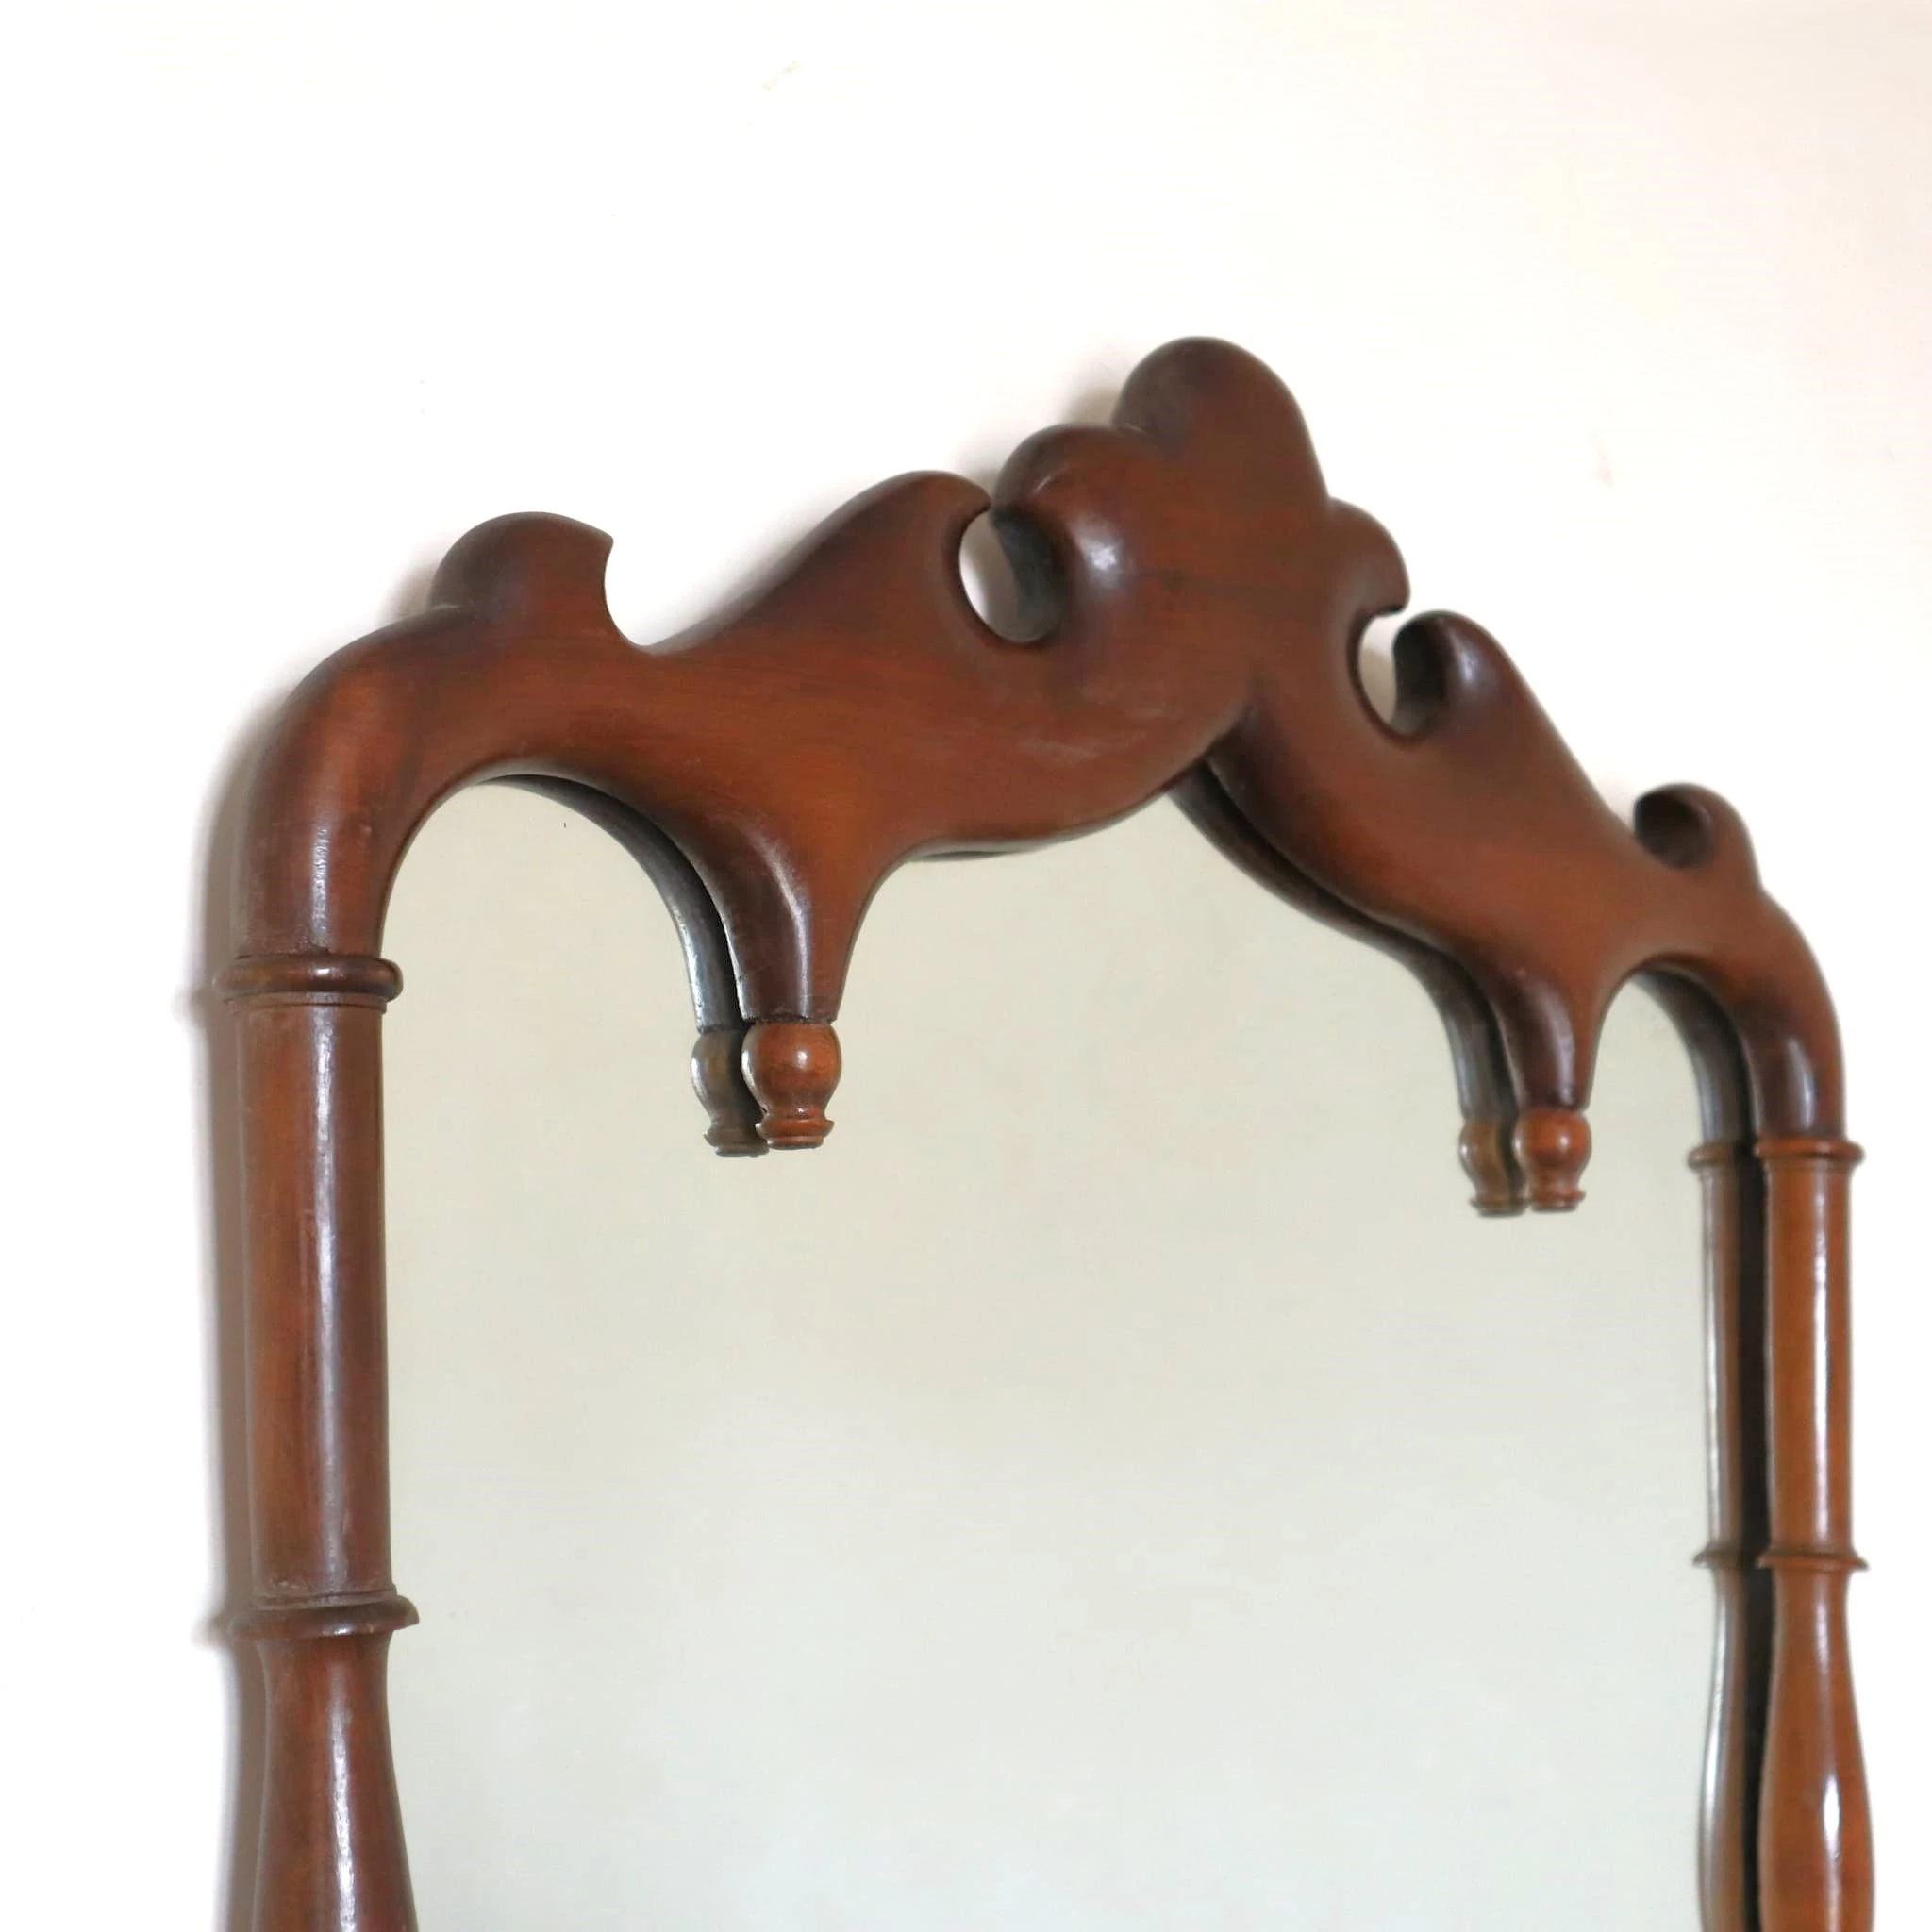 visionidepoca-modern-antique-vintage-mirror-in-walnut-1950s-made-in-italy-detail-view-woodwork